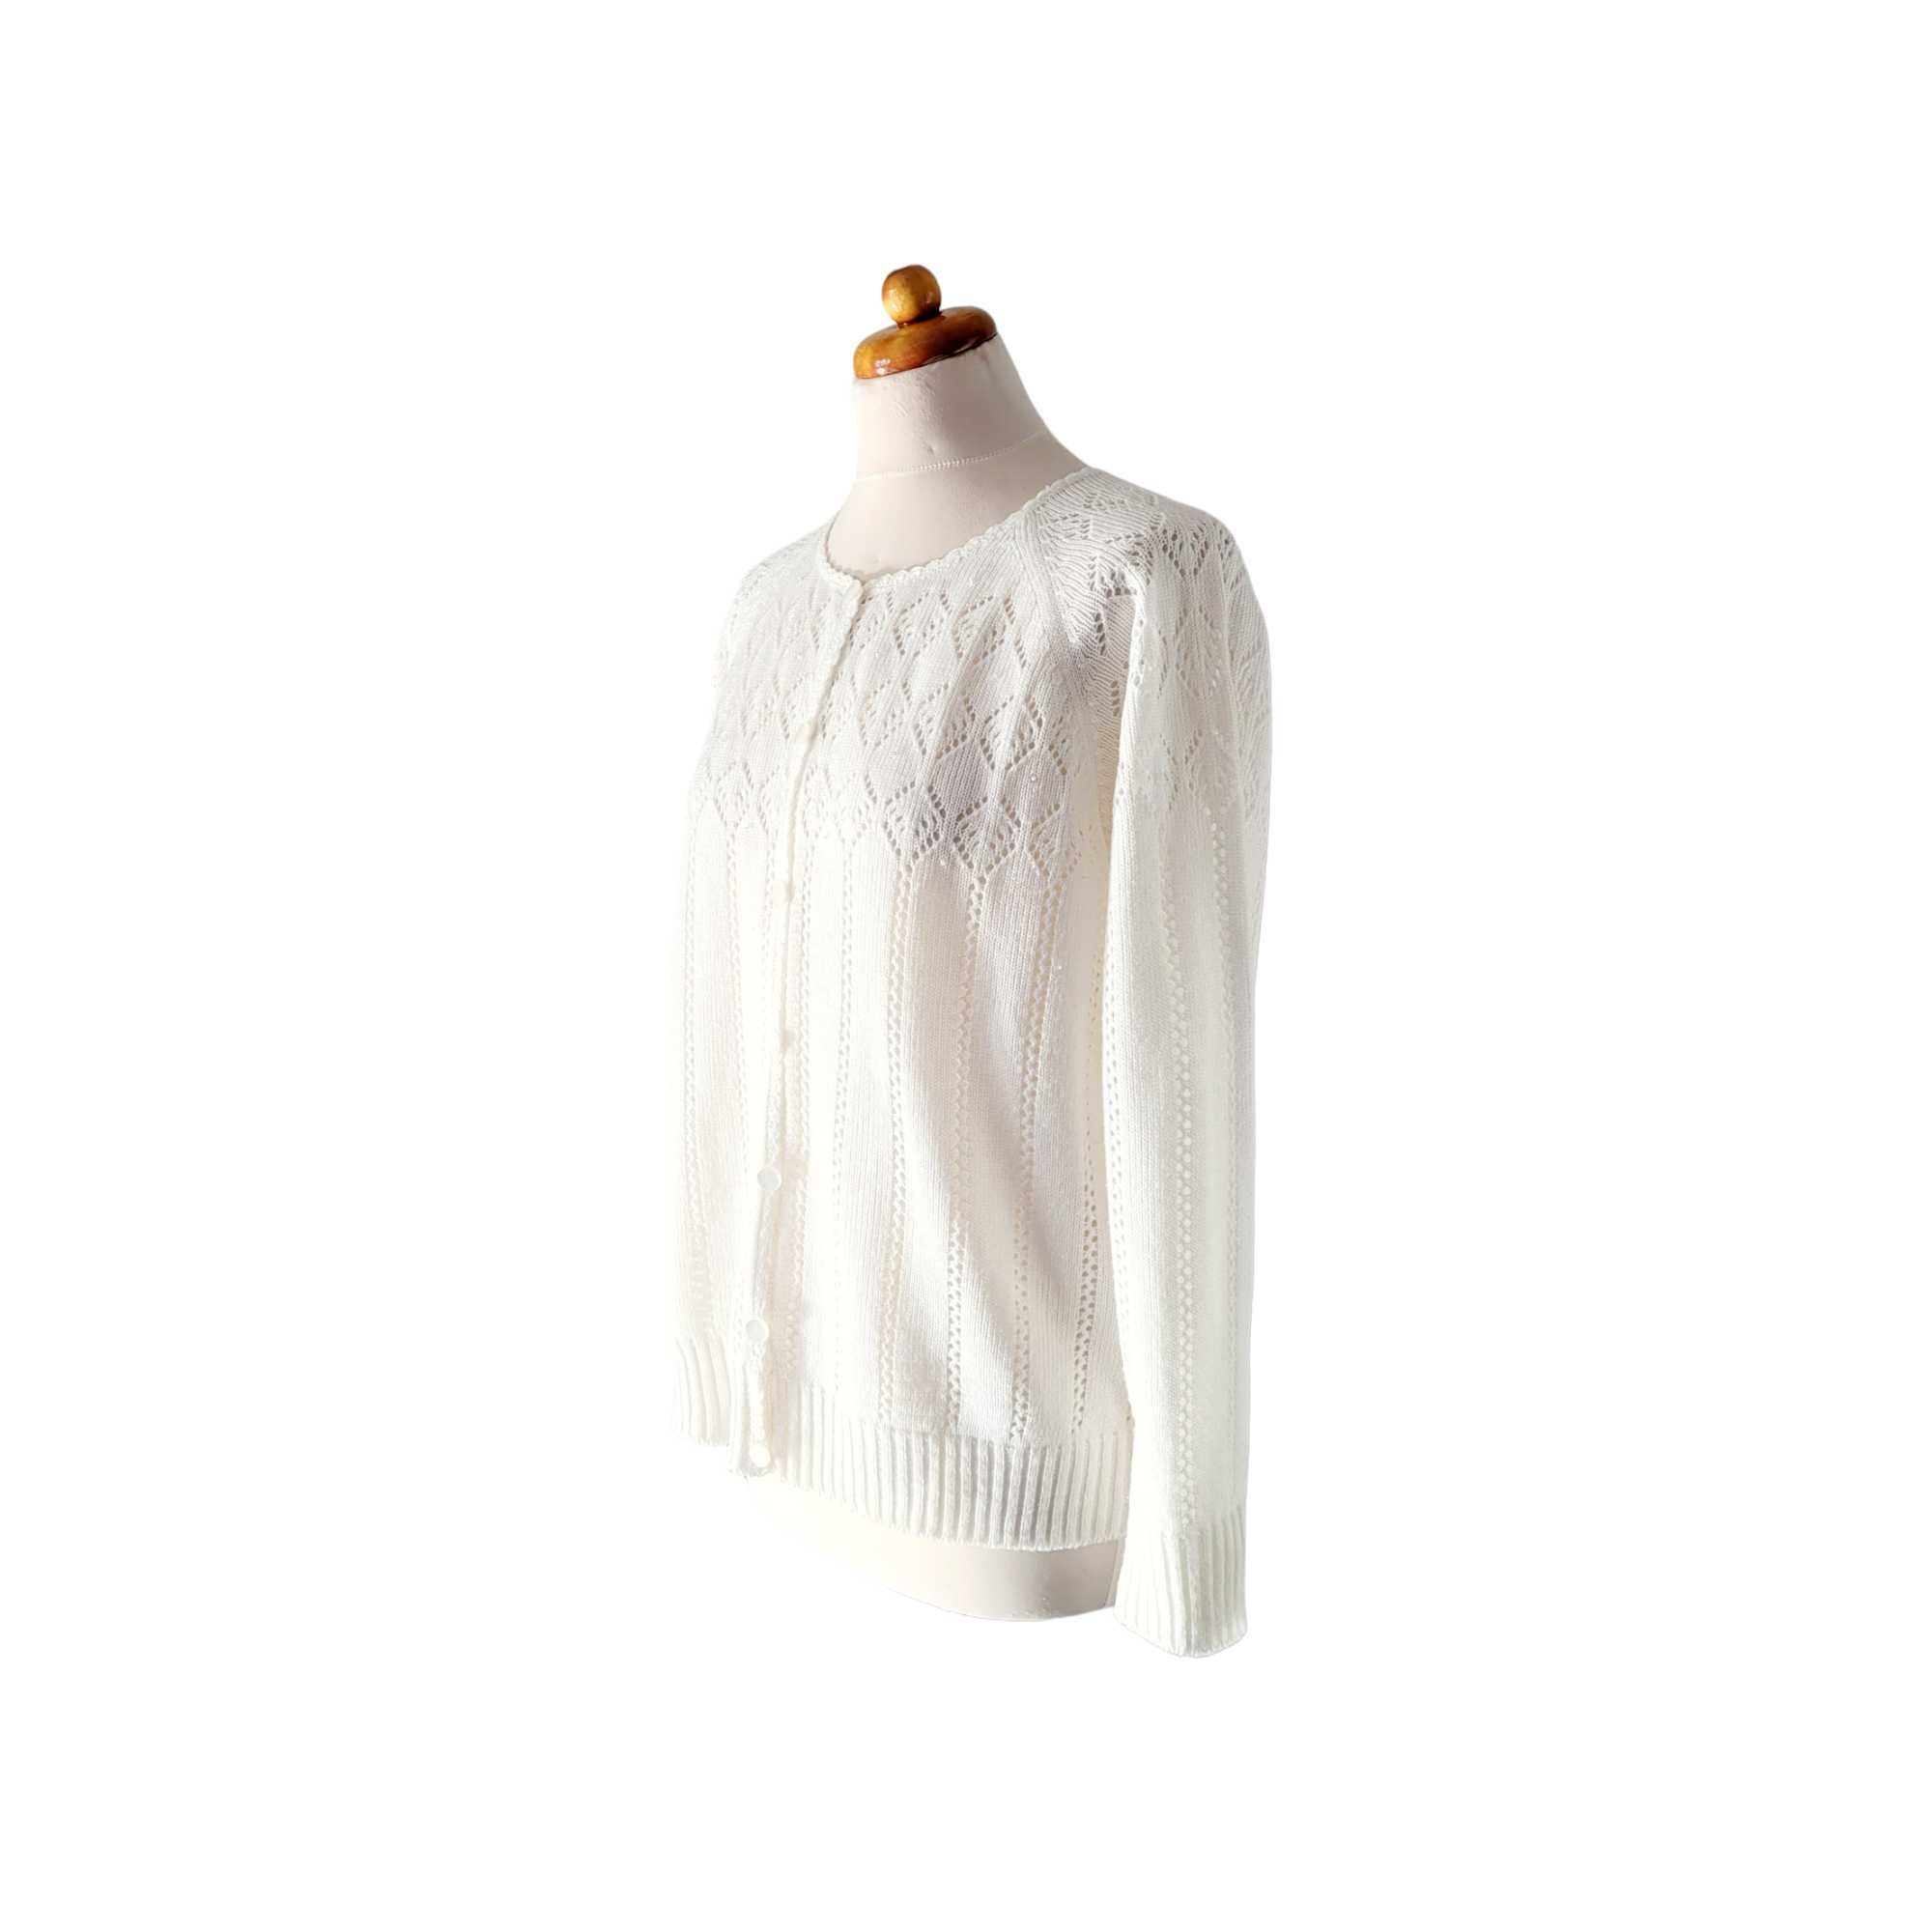 Kremowy ażurowy rozpinany sweter damski kardigan XL vintage boho retro